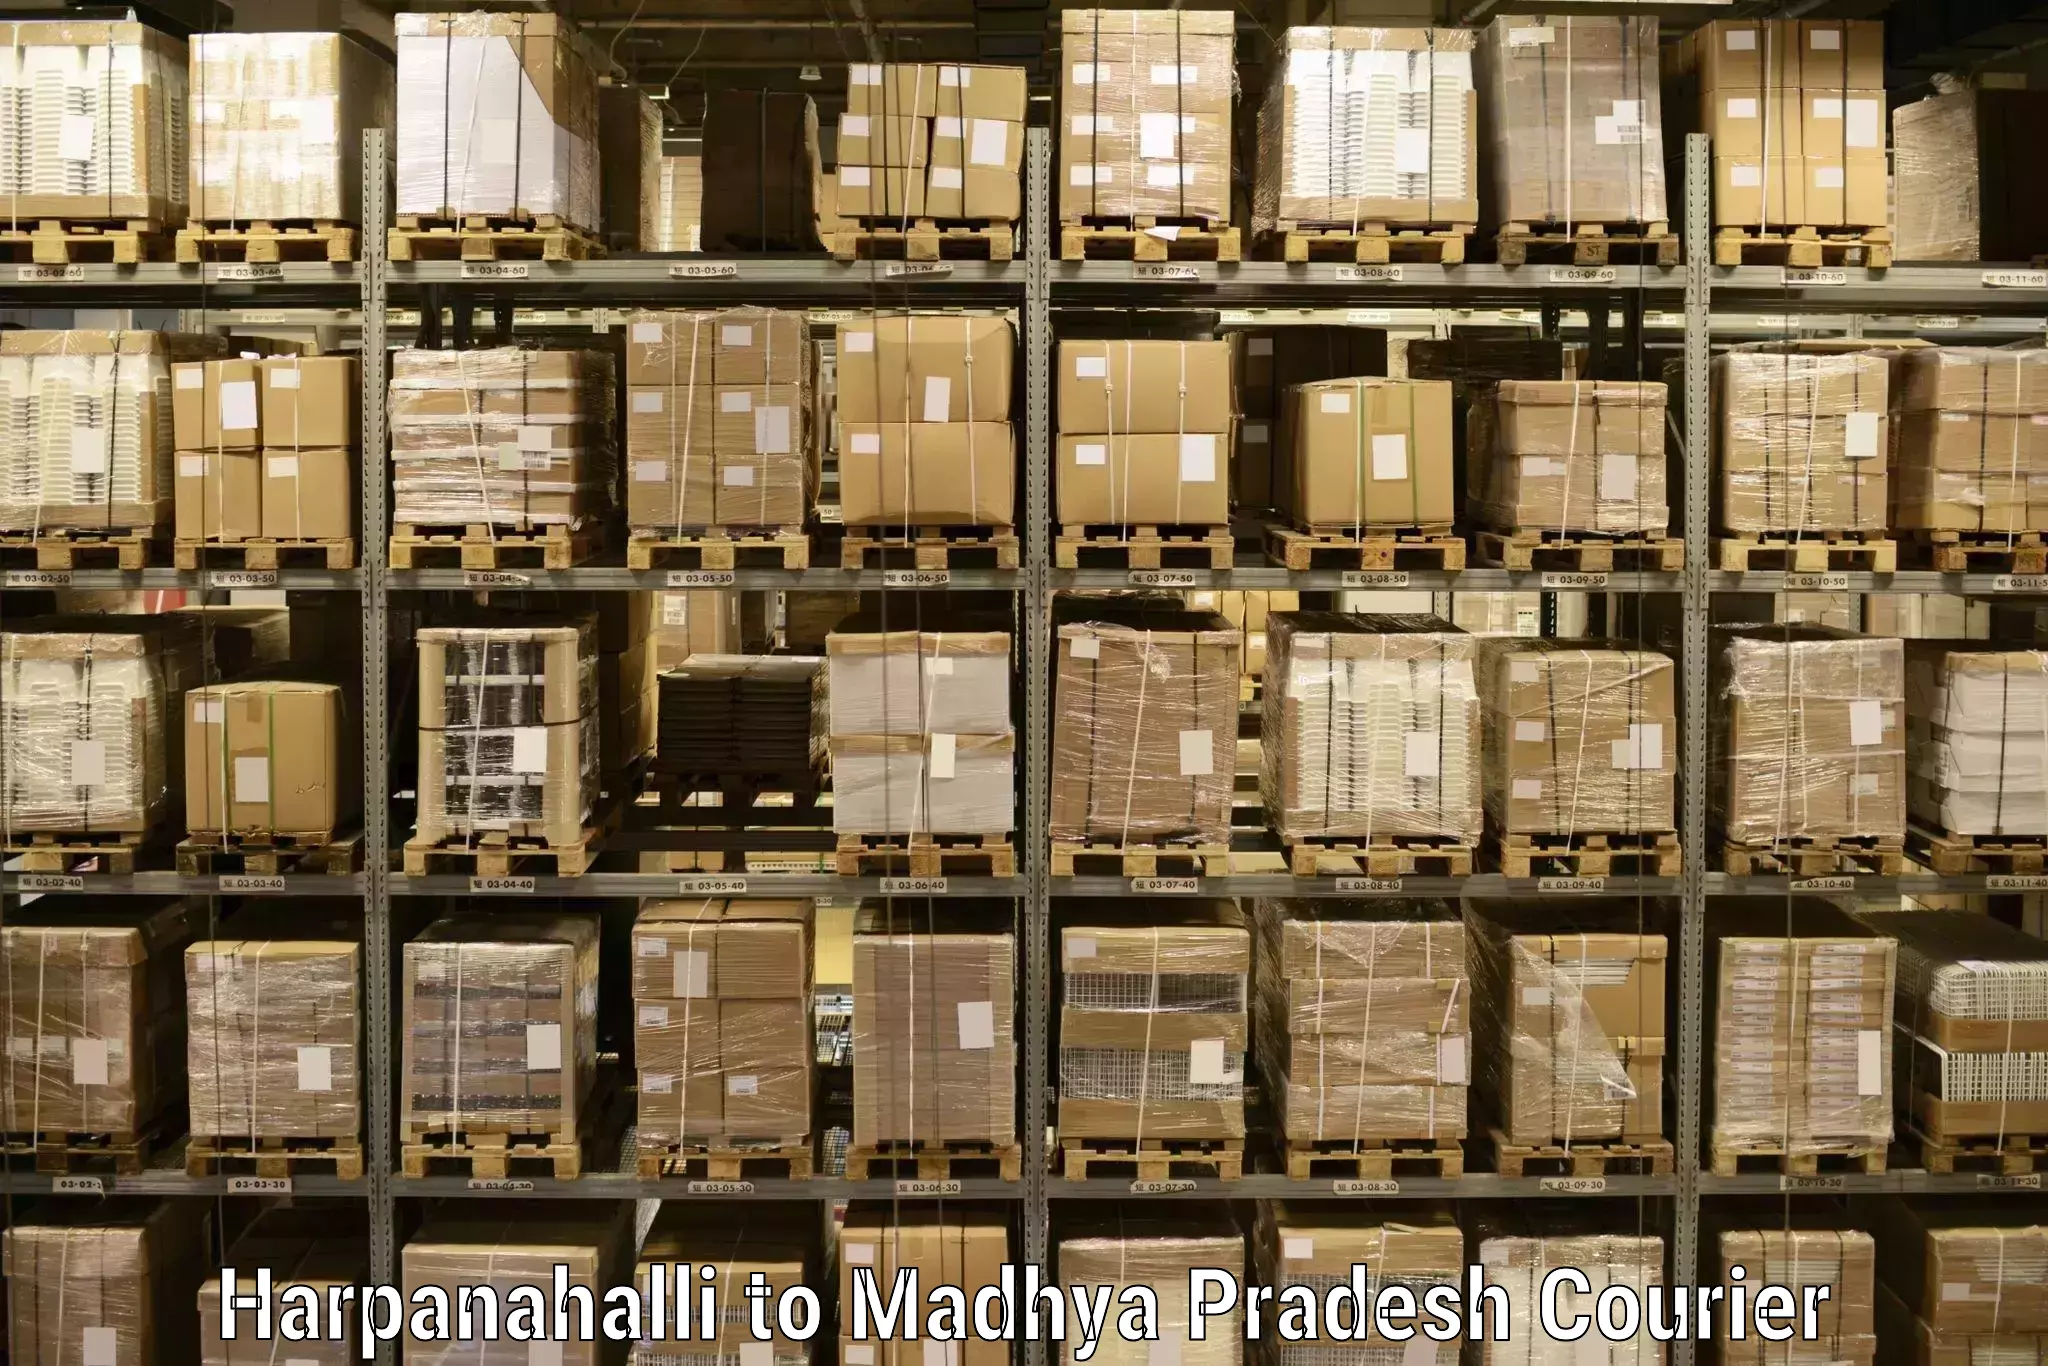 Cost-effective courier options Harpanahalli to Madhya Pradesh